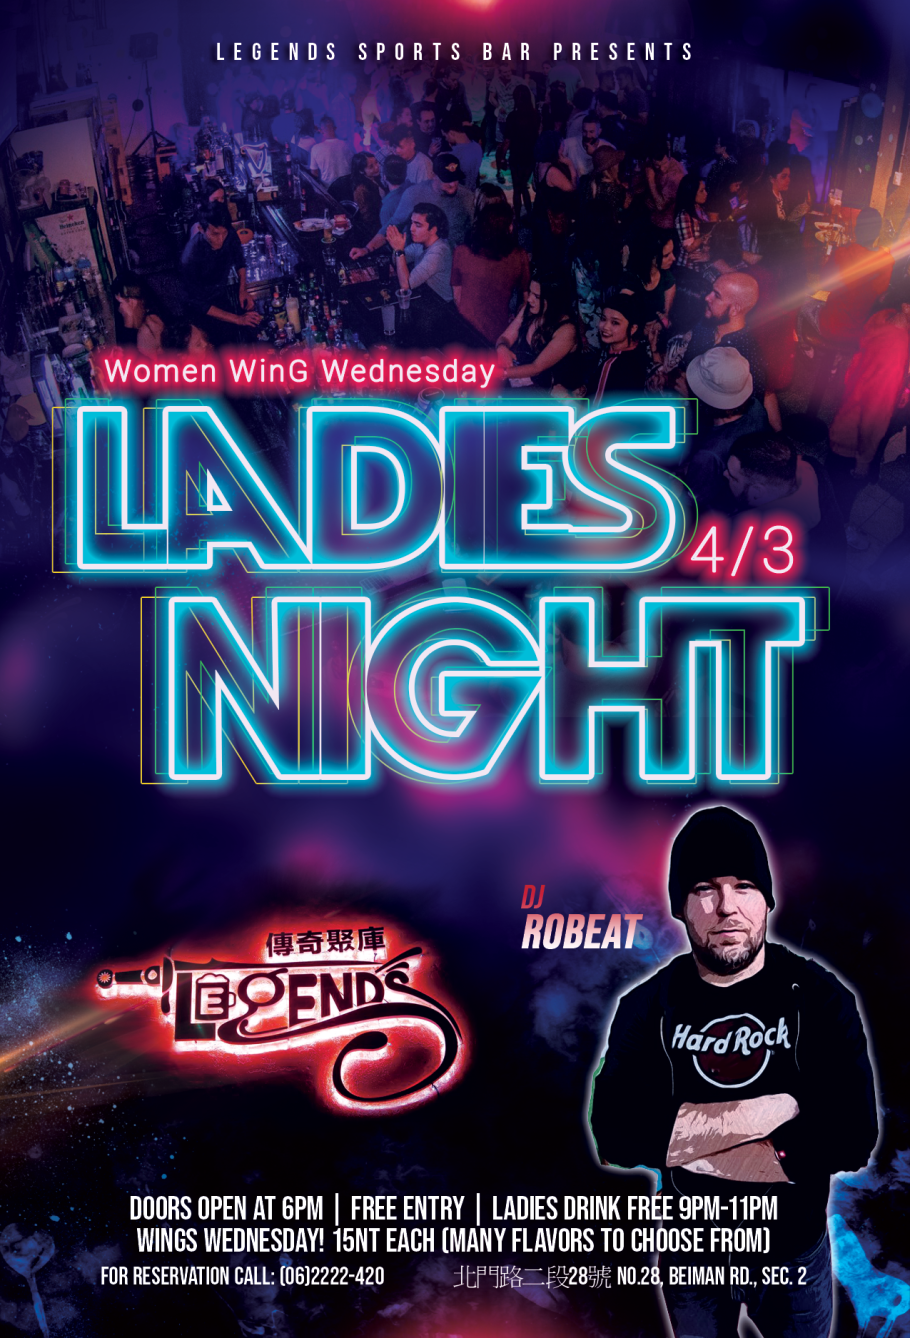 Glow_Night-LADIES-NIGHT-LEGENDS-BAR-4-3-only-DJ-RoBeat.png